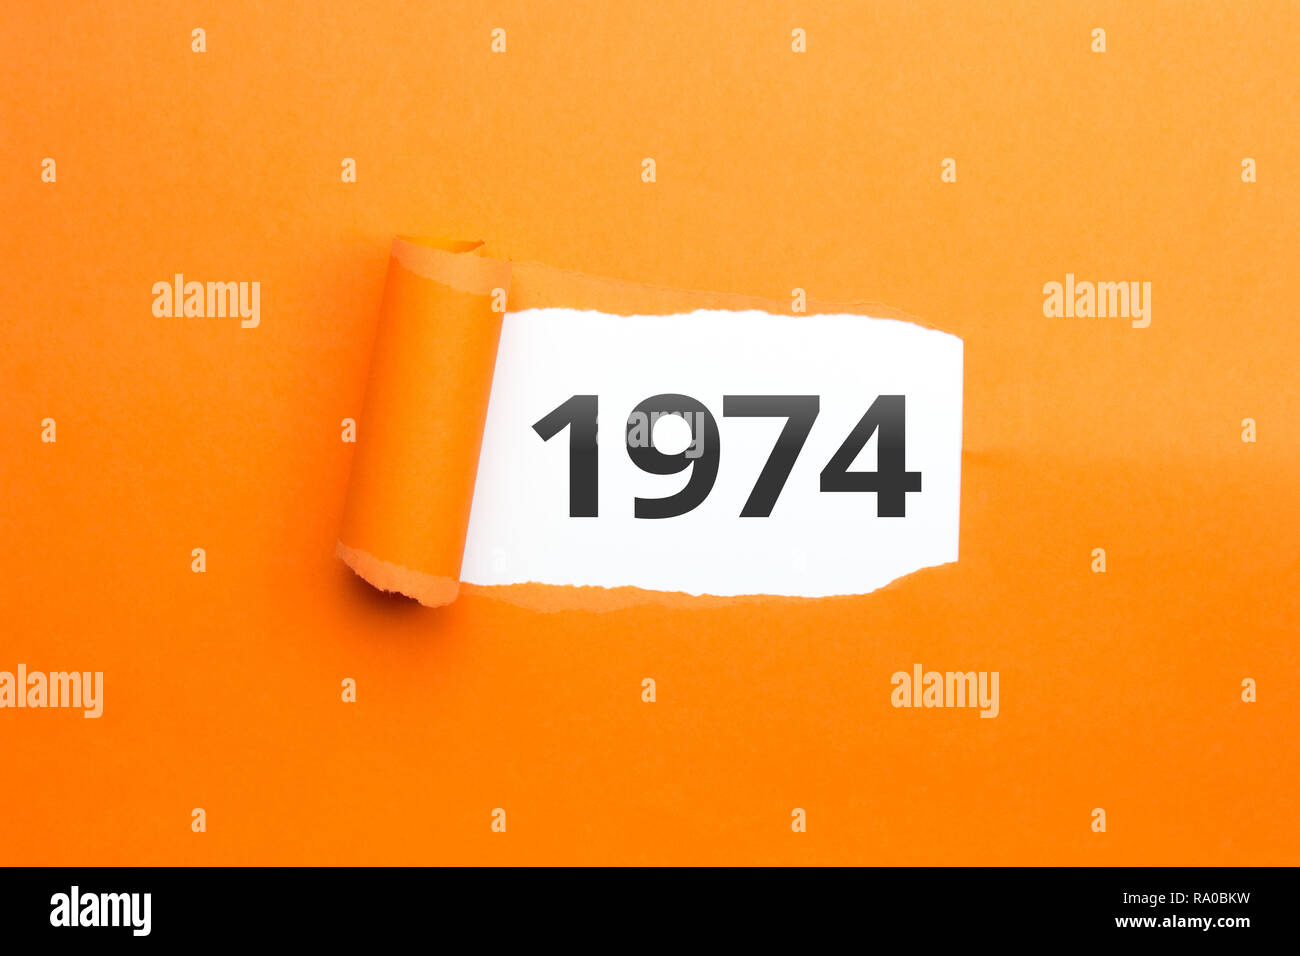 surprising Number / Year 1974 orange background Stock Photo